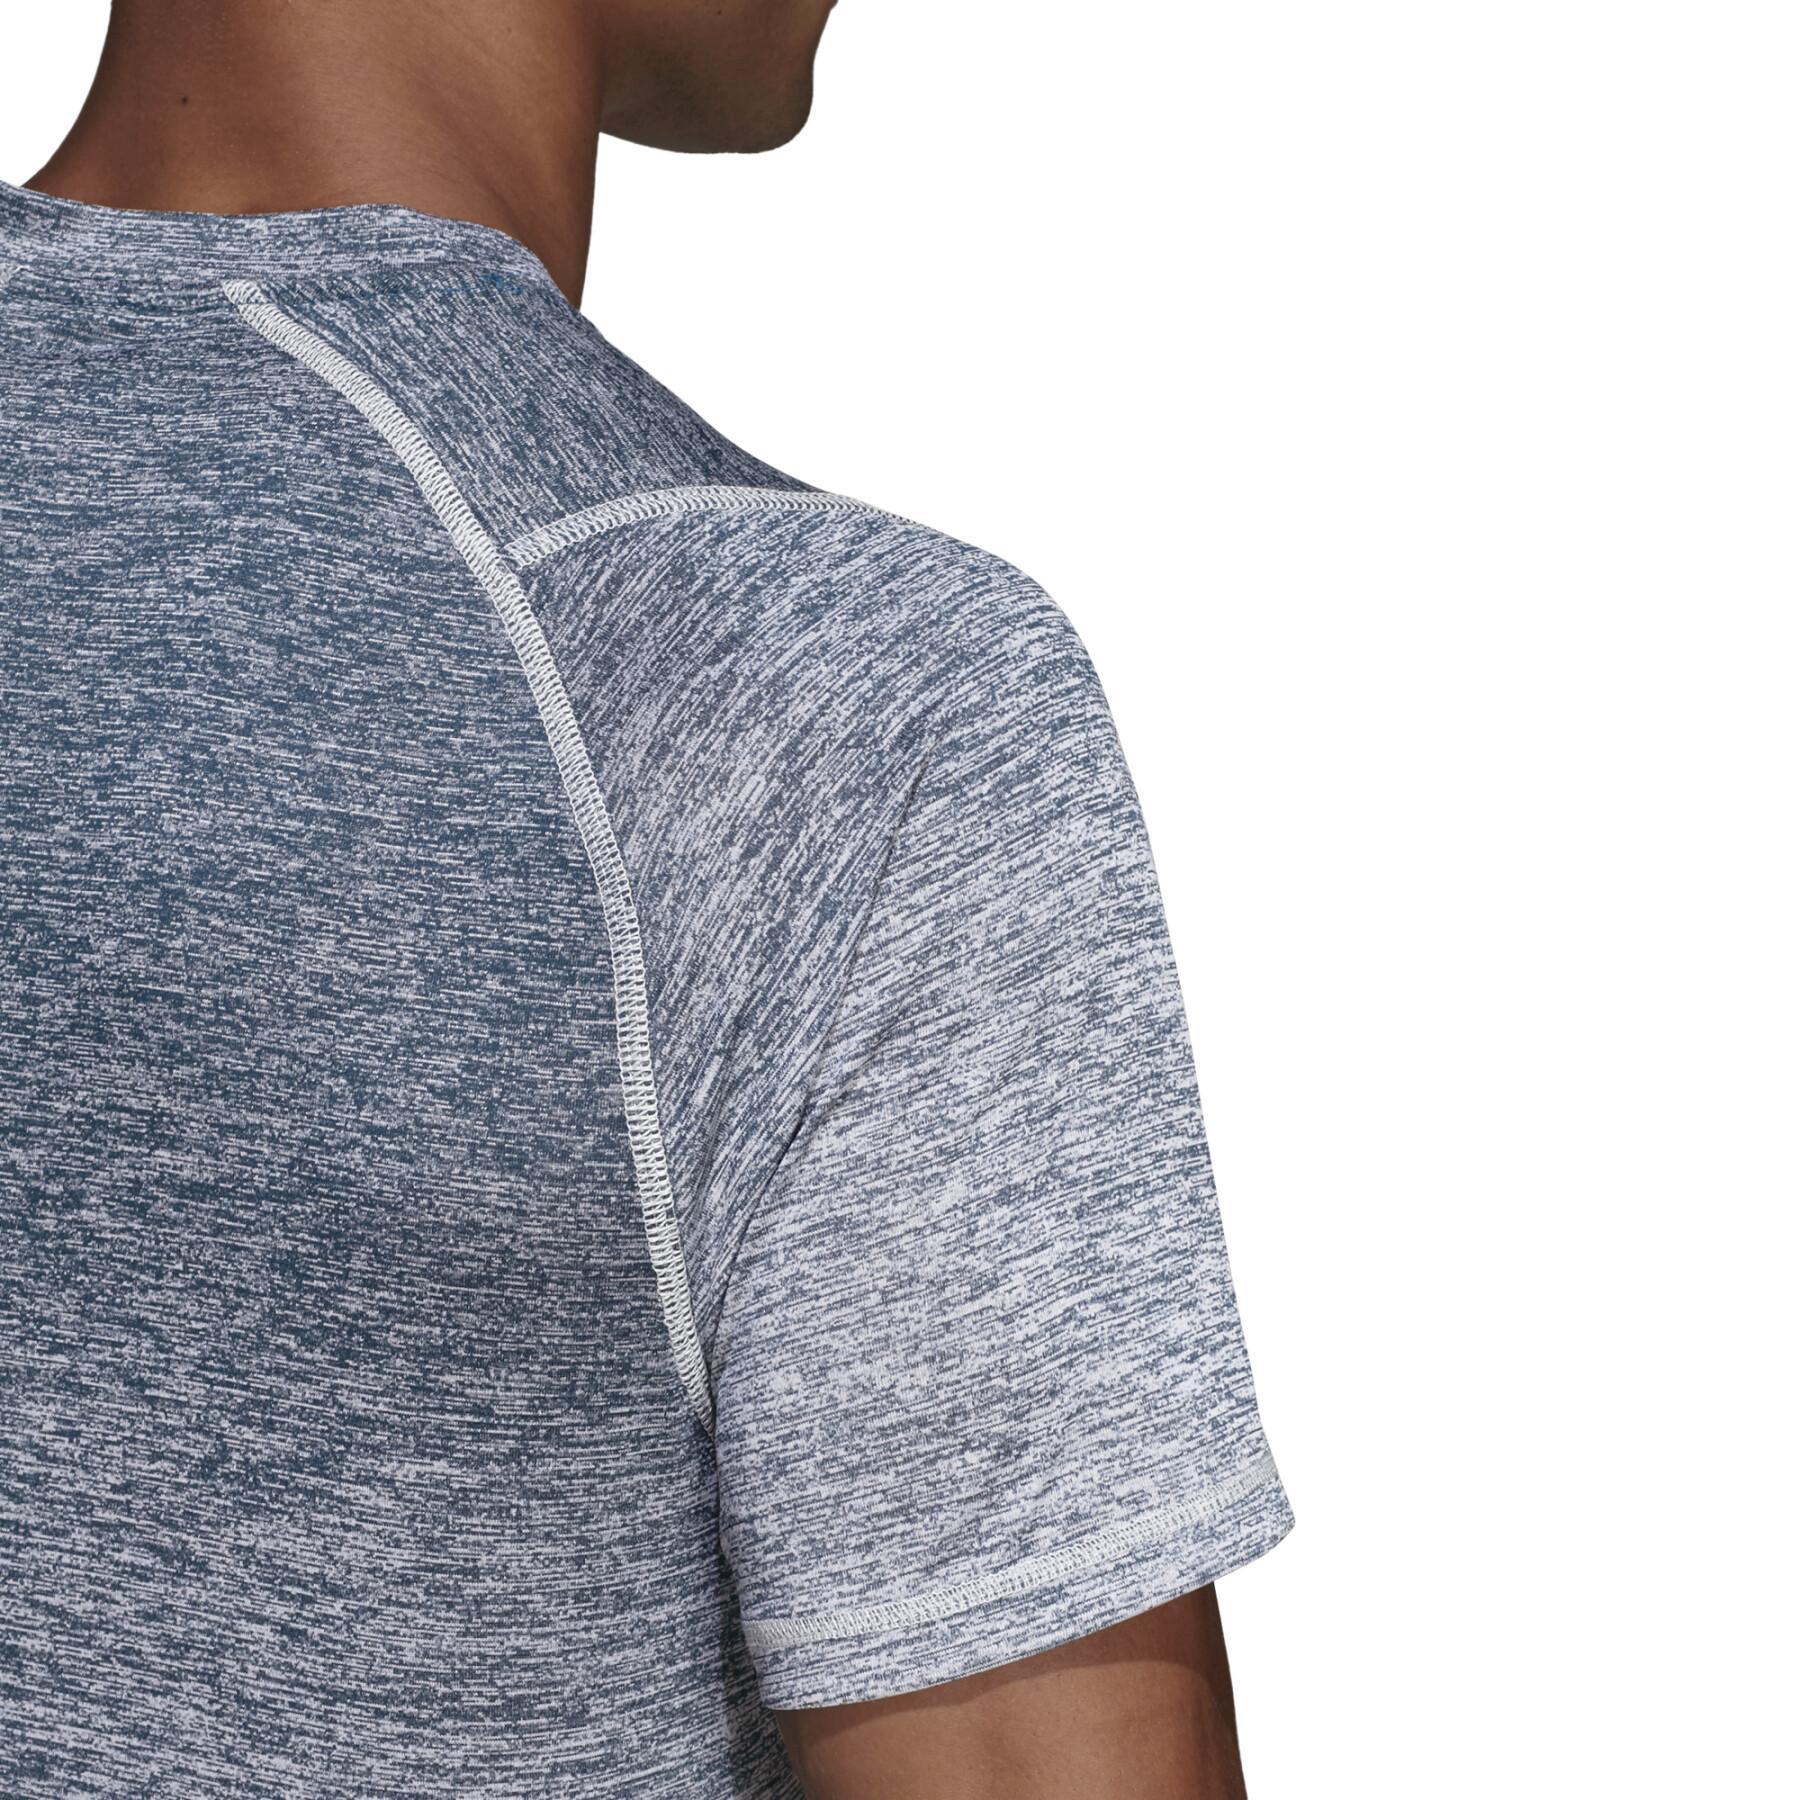 T-shirt adidas FreeLift 360 Gradient Graphic